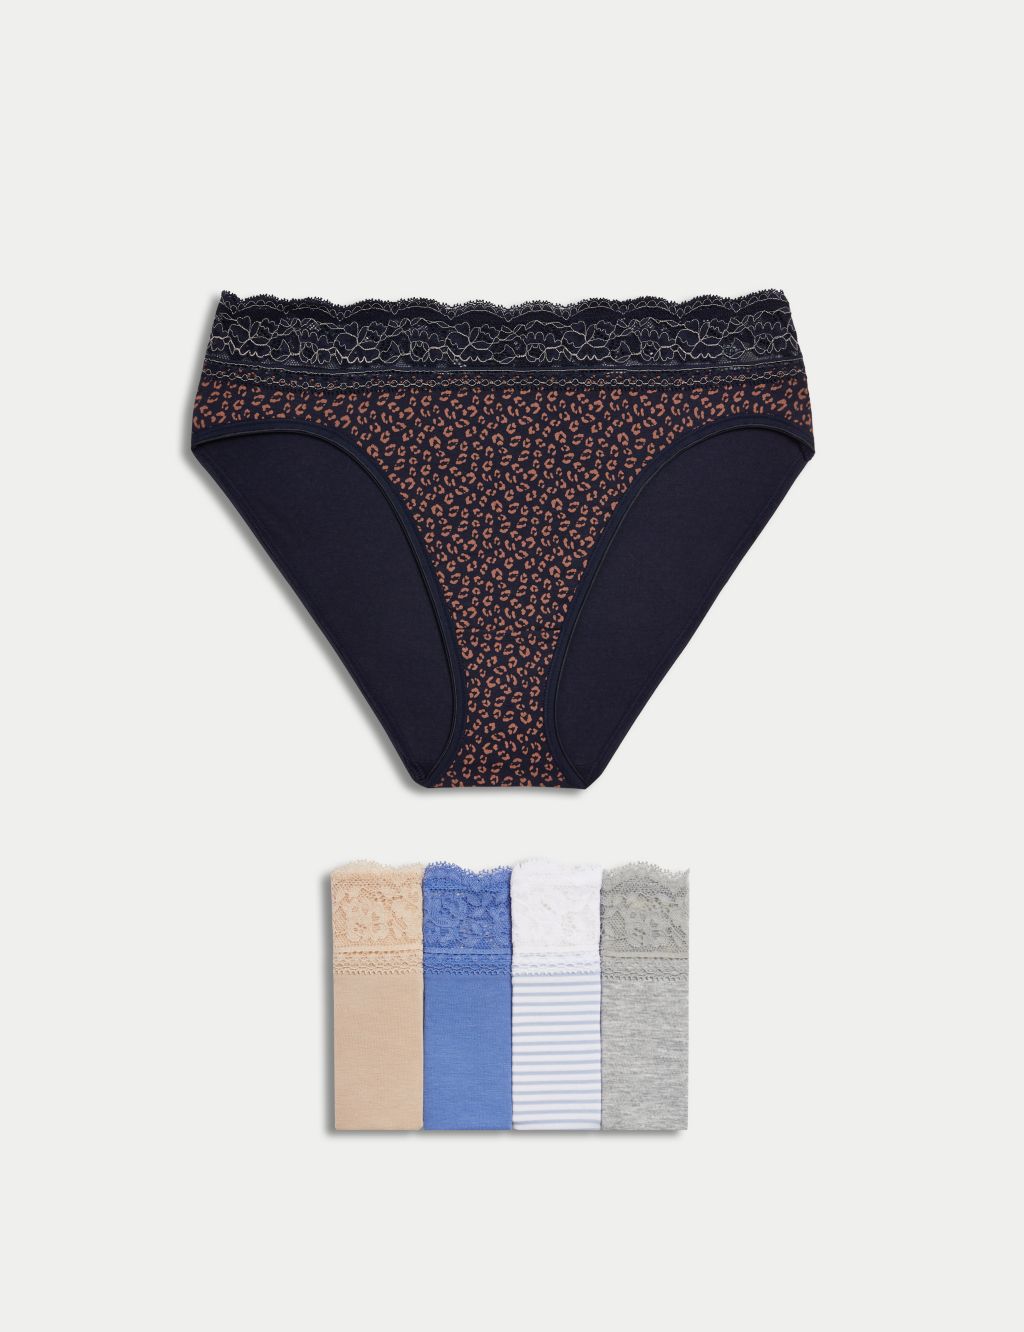 M&S GREY SEXY Ultra-Feminine Lace Waist Bikini Knickers - Size 6 to 18  (614590) £4.49 - PicClick UK